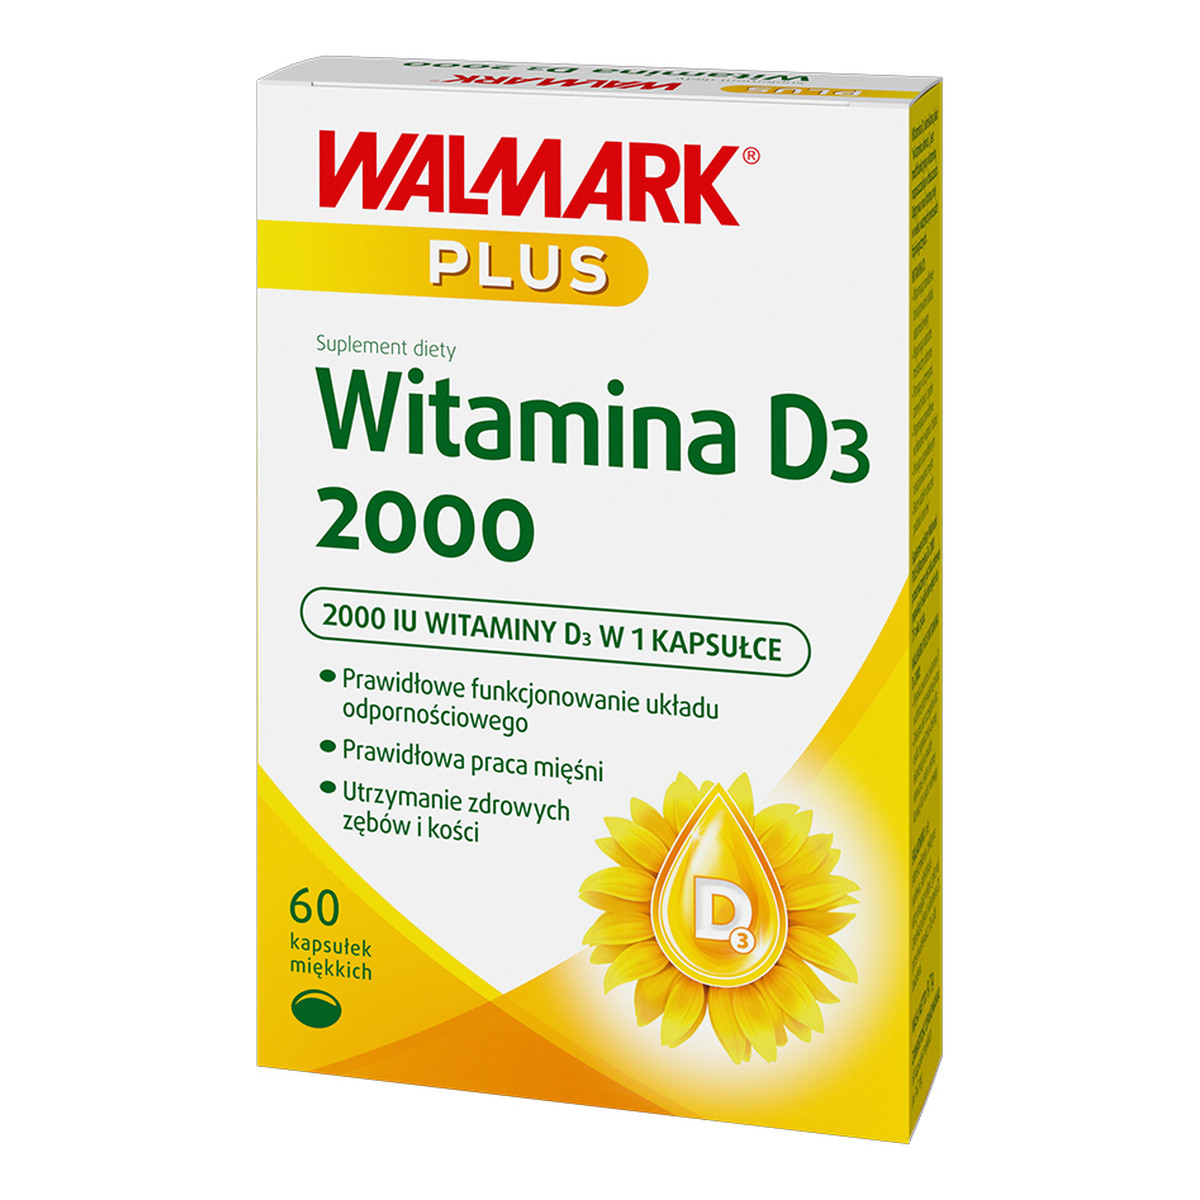 Walmark Plus witamina d3 2000 suplement diety 60 kapsułek